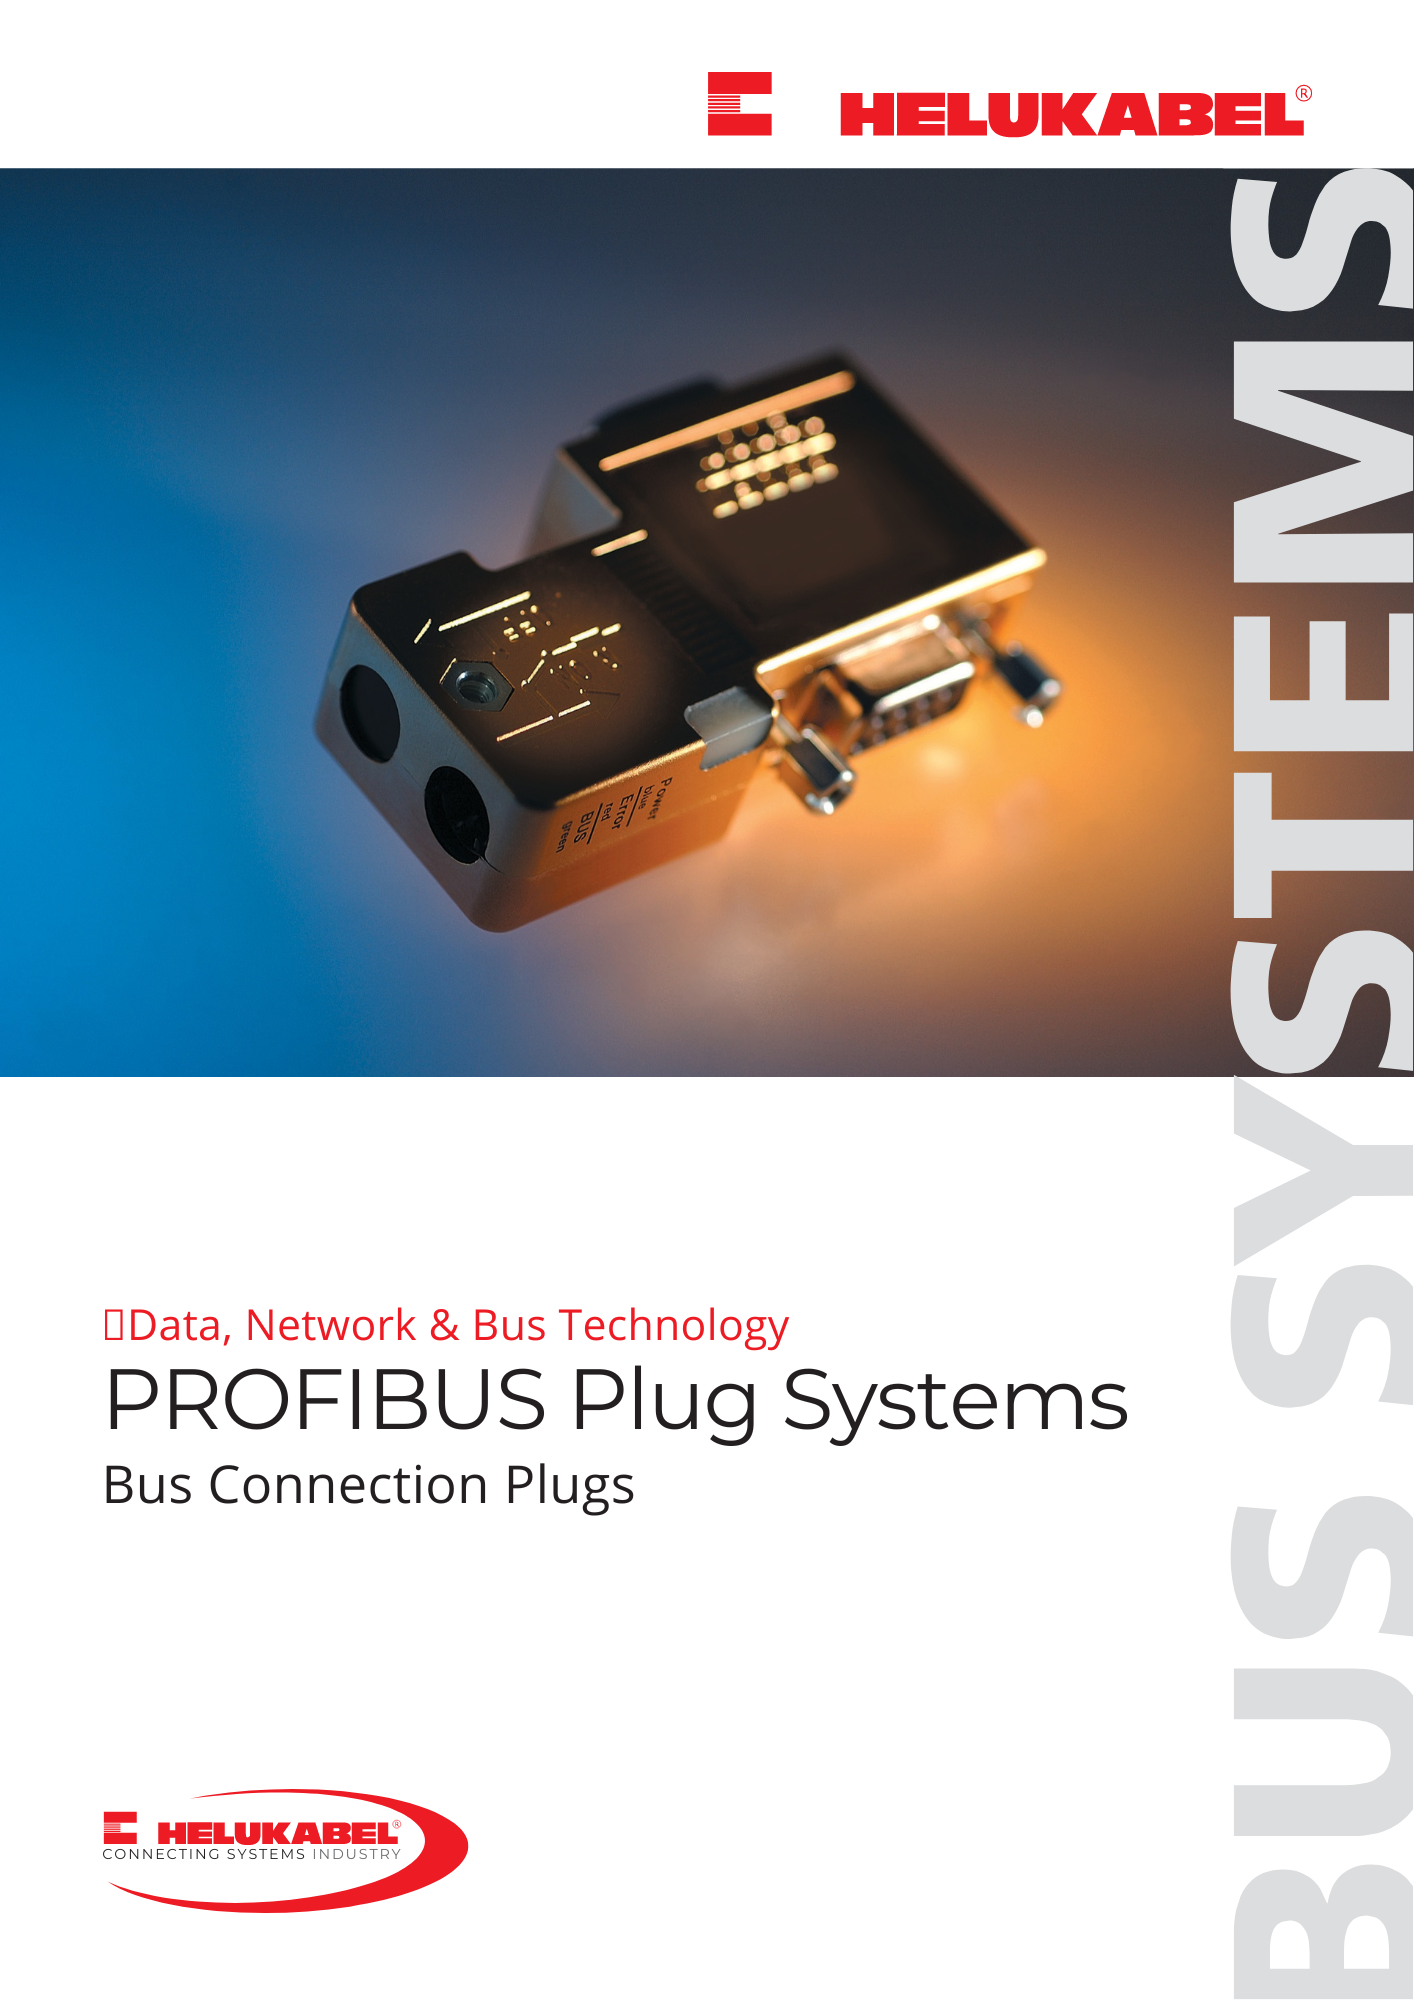 PROFIBUS plug systems